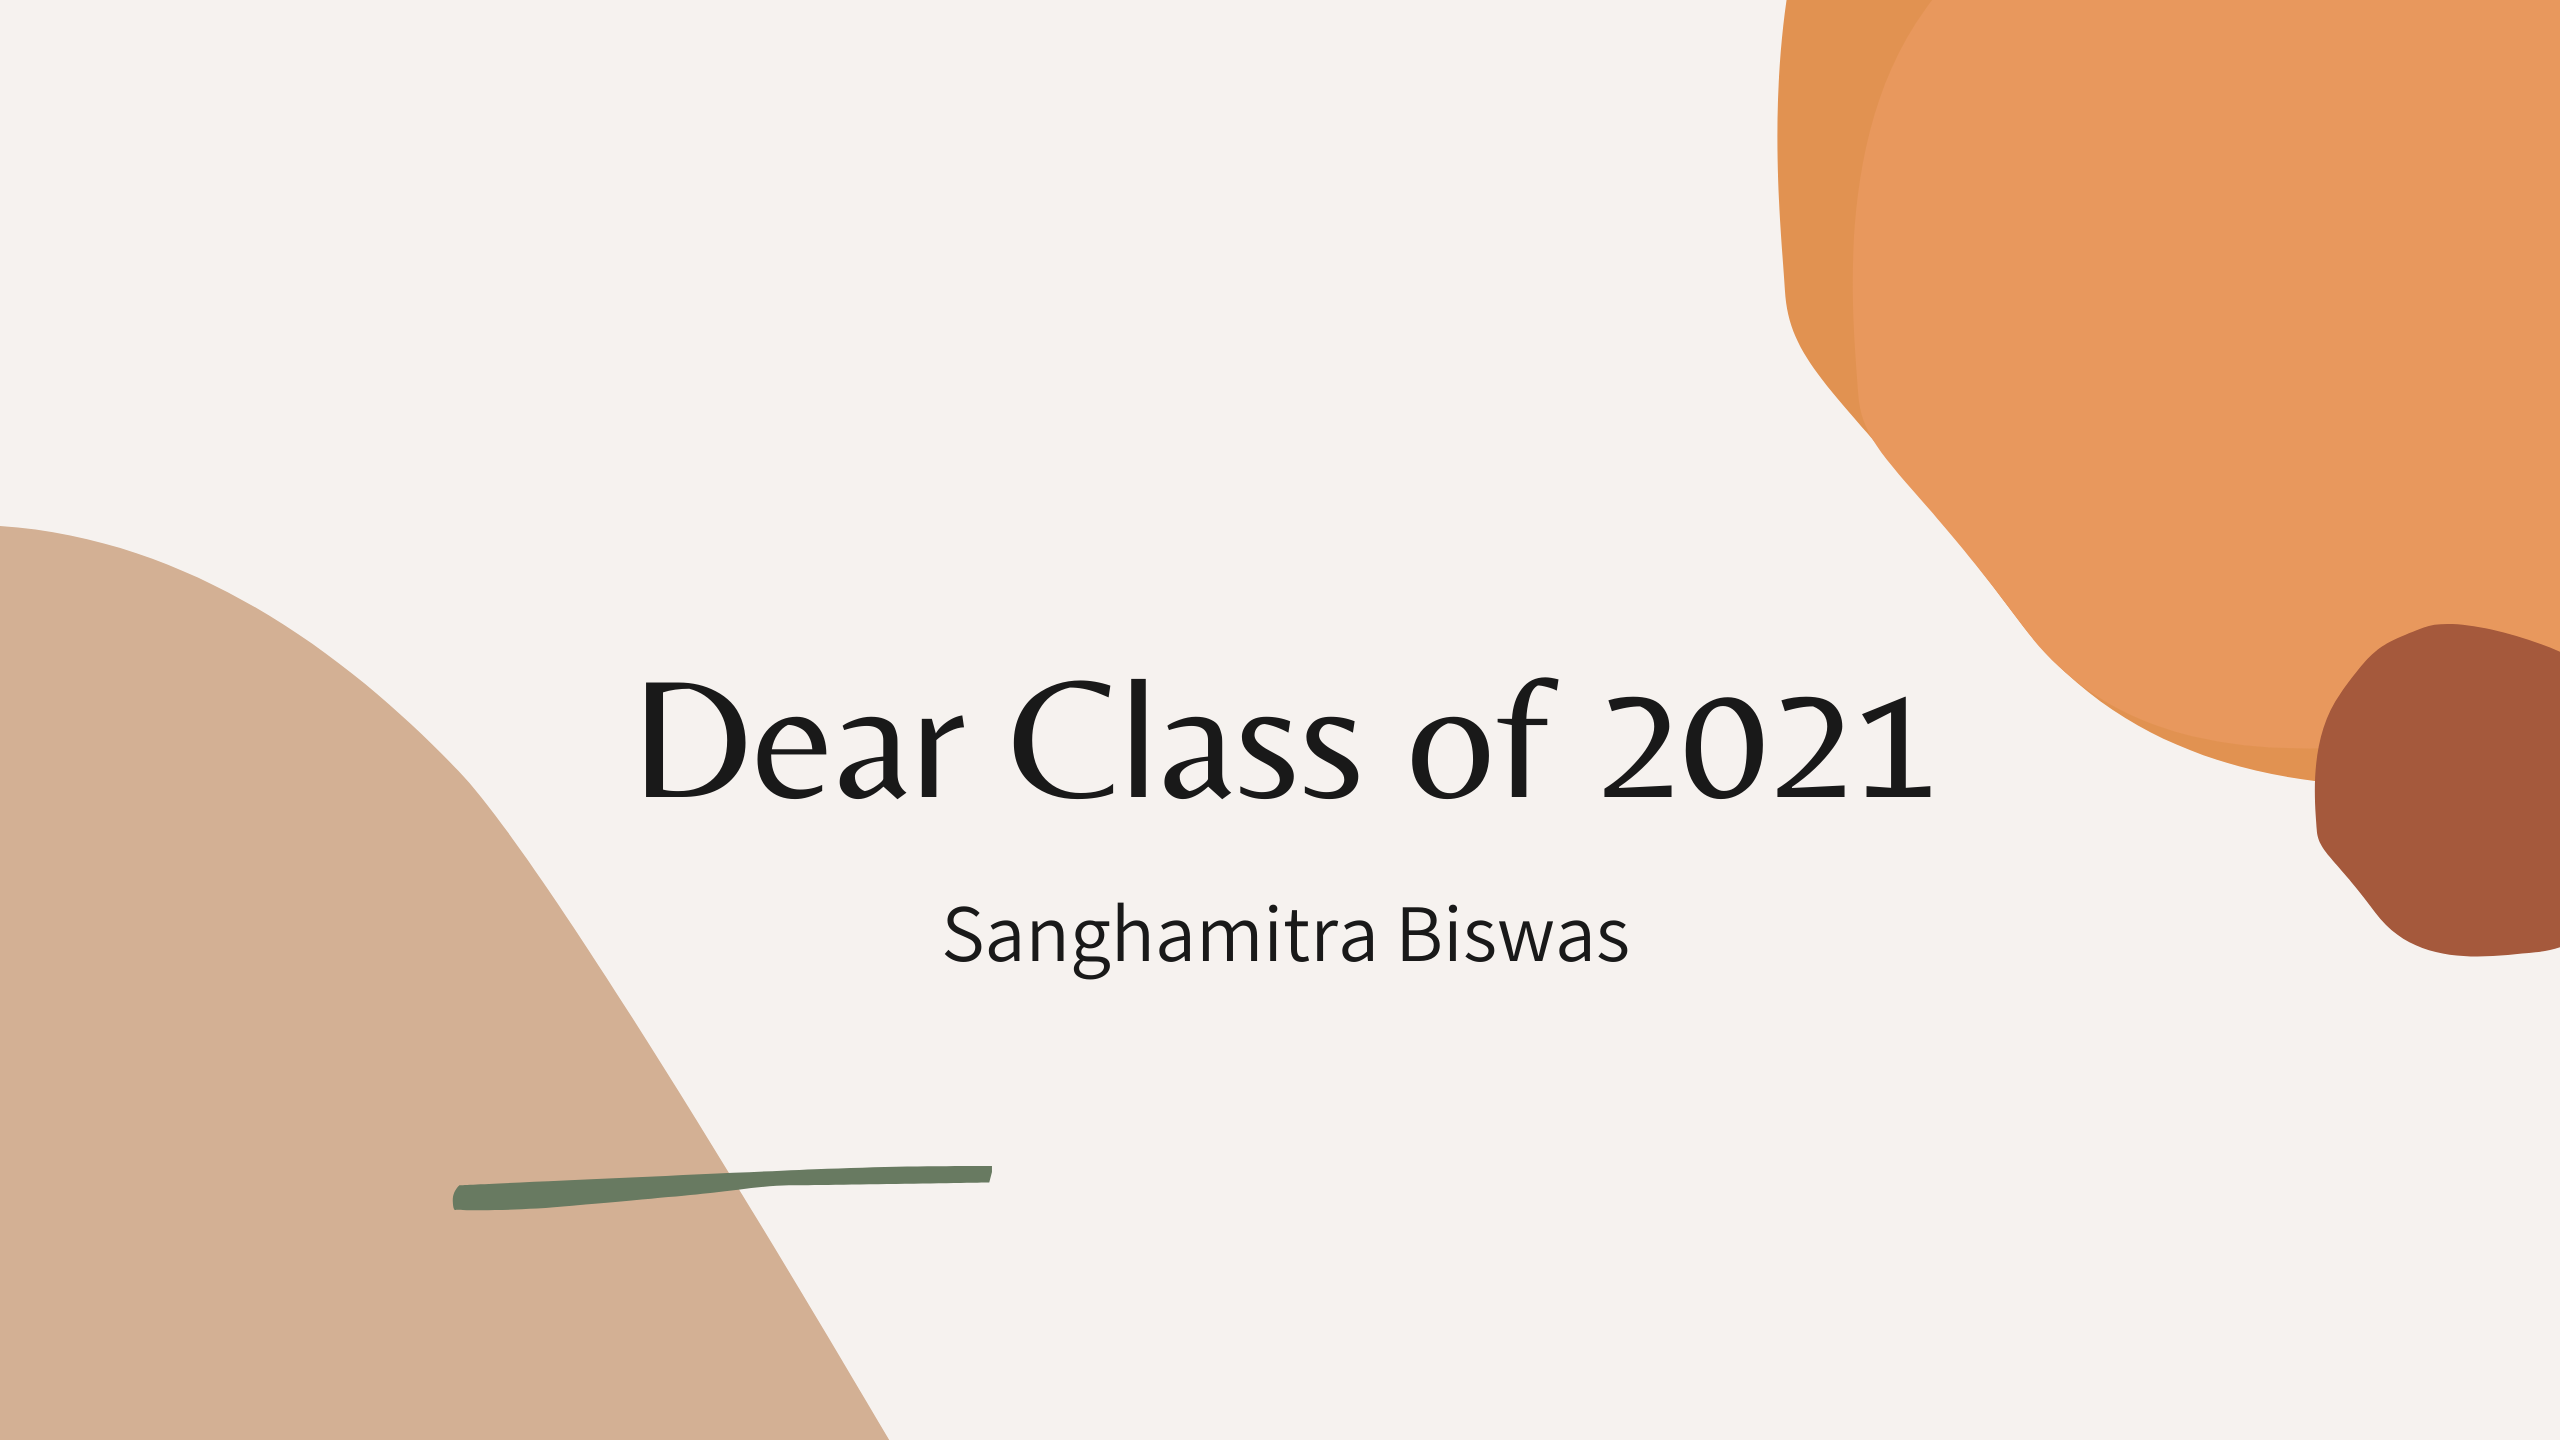 Dear Class of 2021